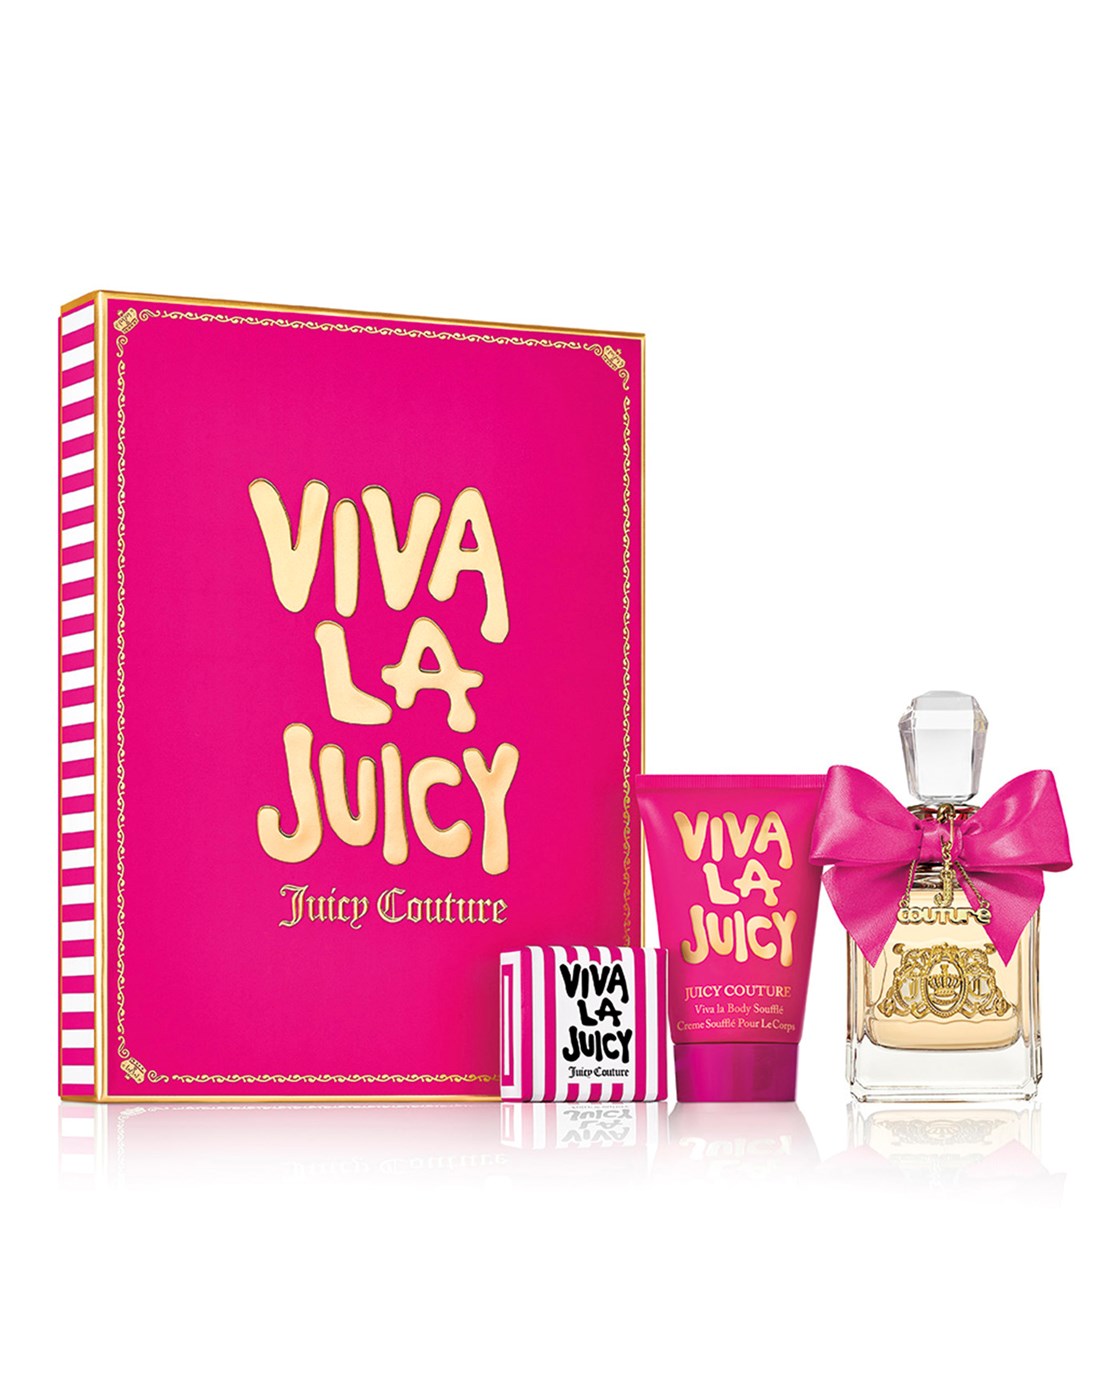 Juicy Couture Viva La Bar Soap Gift Set